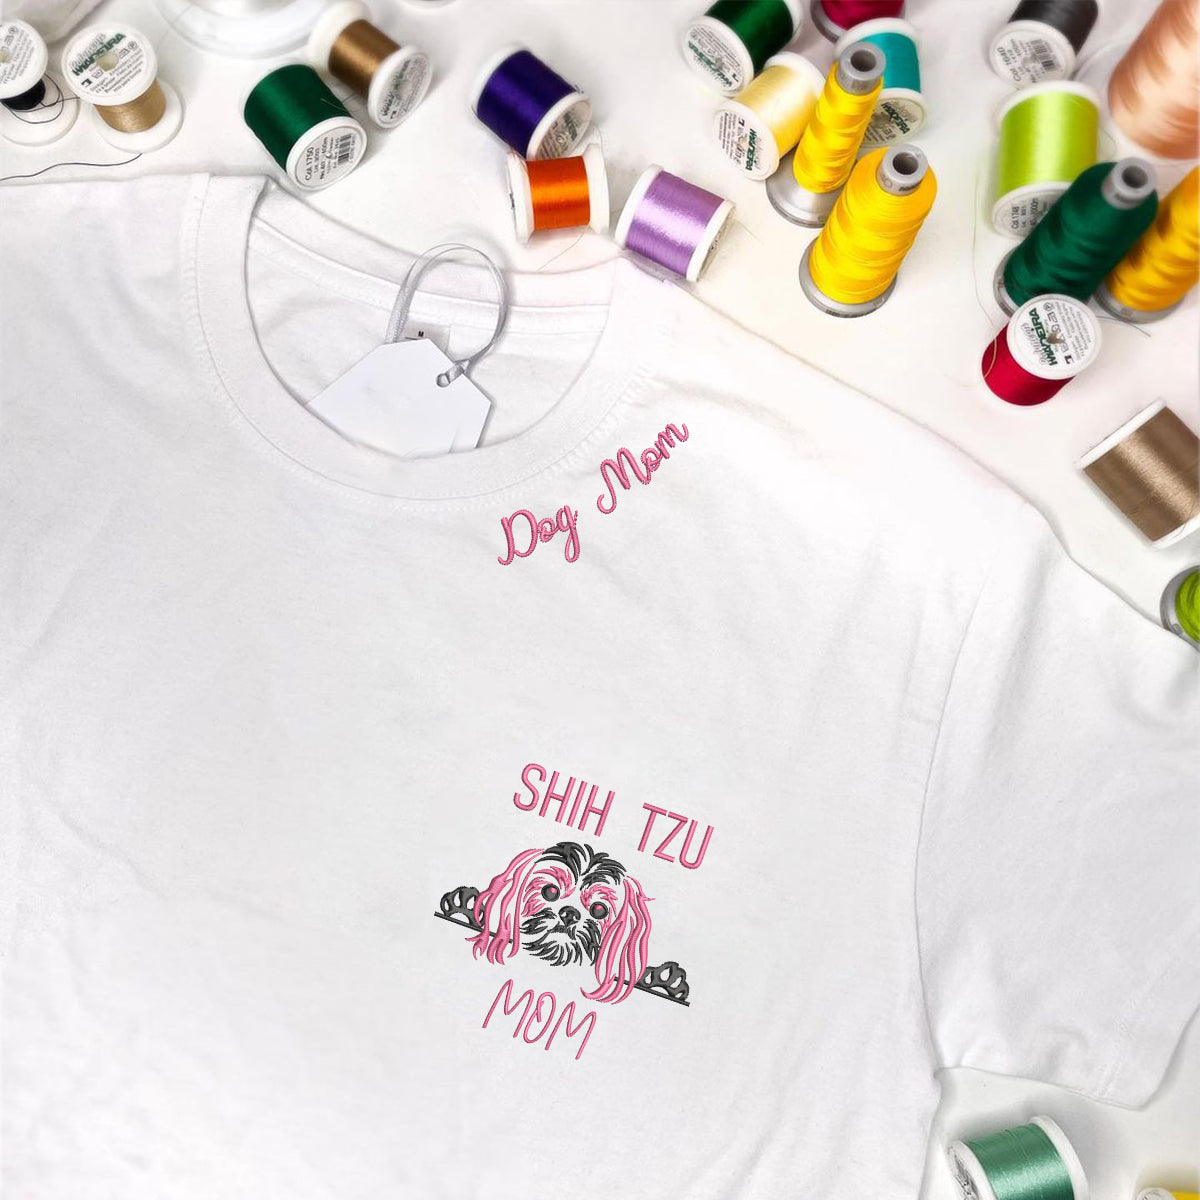 Shih Tzu Dad Shirt - Shih Tzu T-Shirt - Dog T-shirts - Dog Lover Shirt - Pet  Lover Clothing - Dog Shirt - Dog Dad - Shih Tzu T Shirt